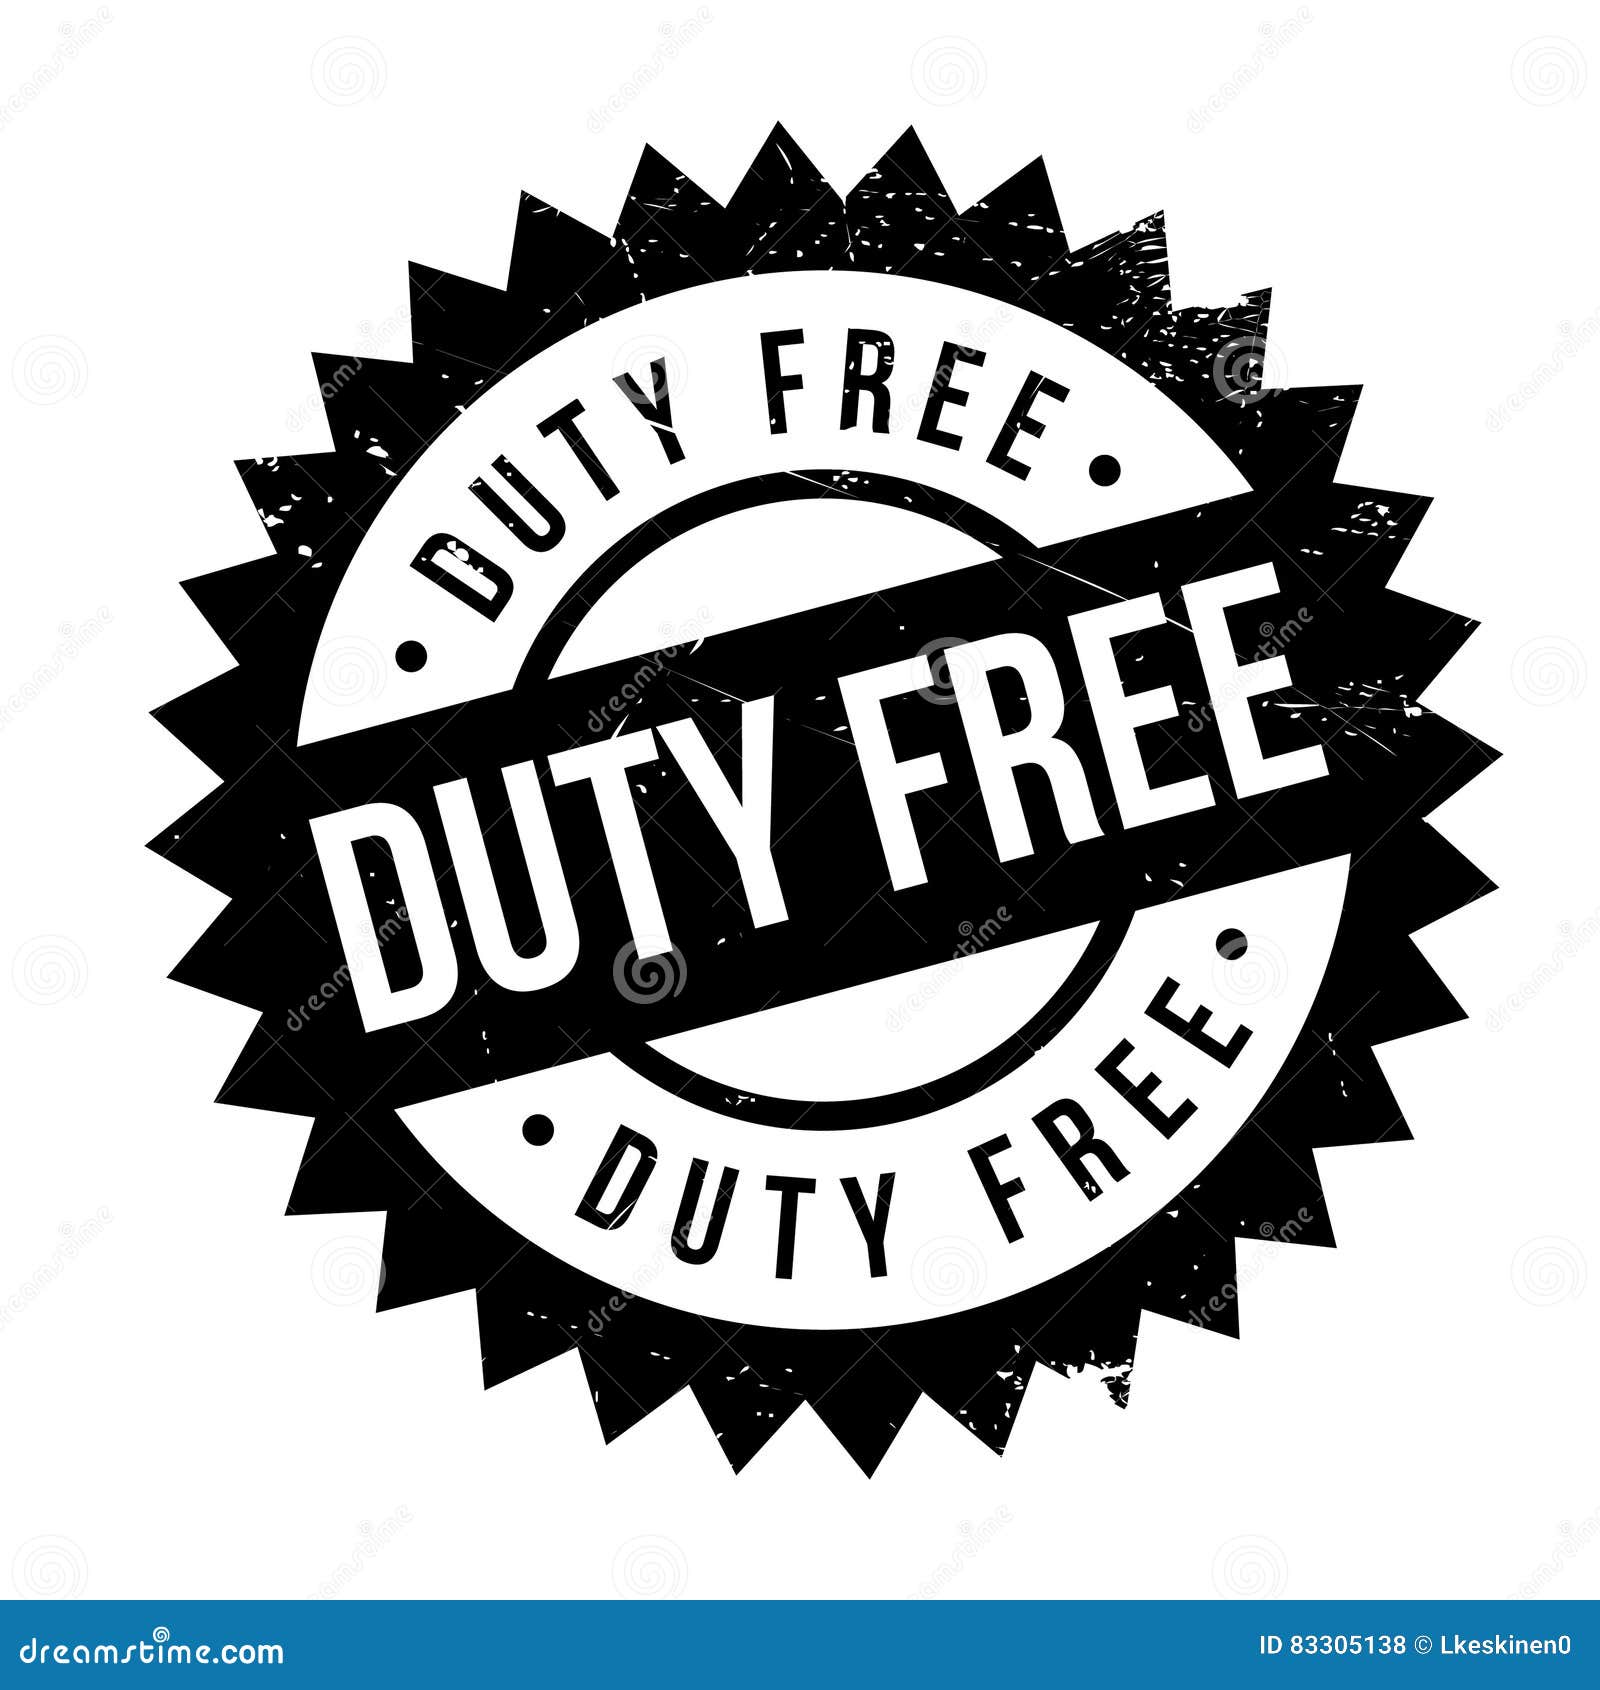 Duty Free Stamp Royalty-Free Stock Photography | CartoonDealer.com #855013251300 x 1390